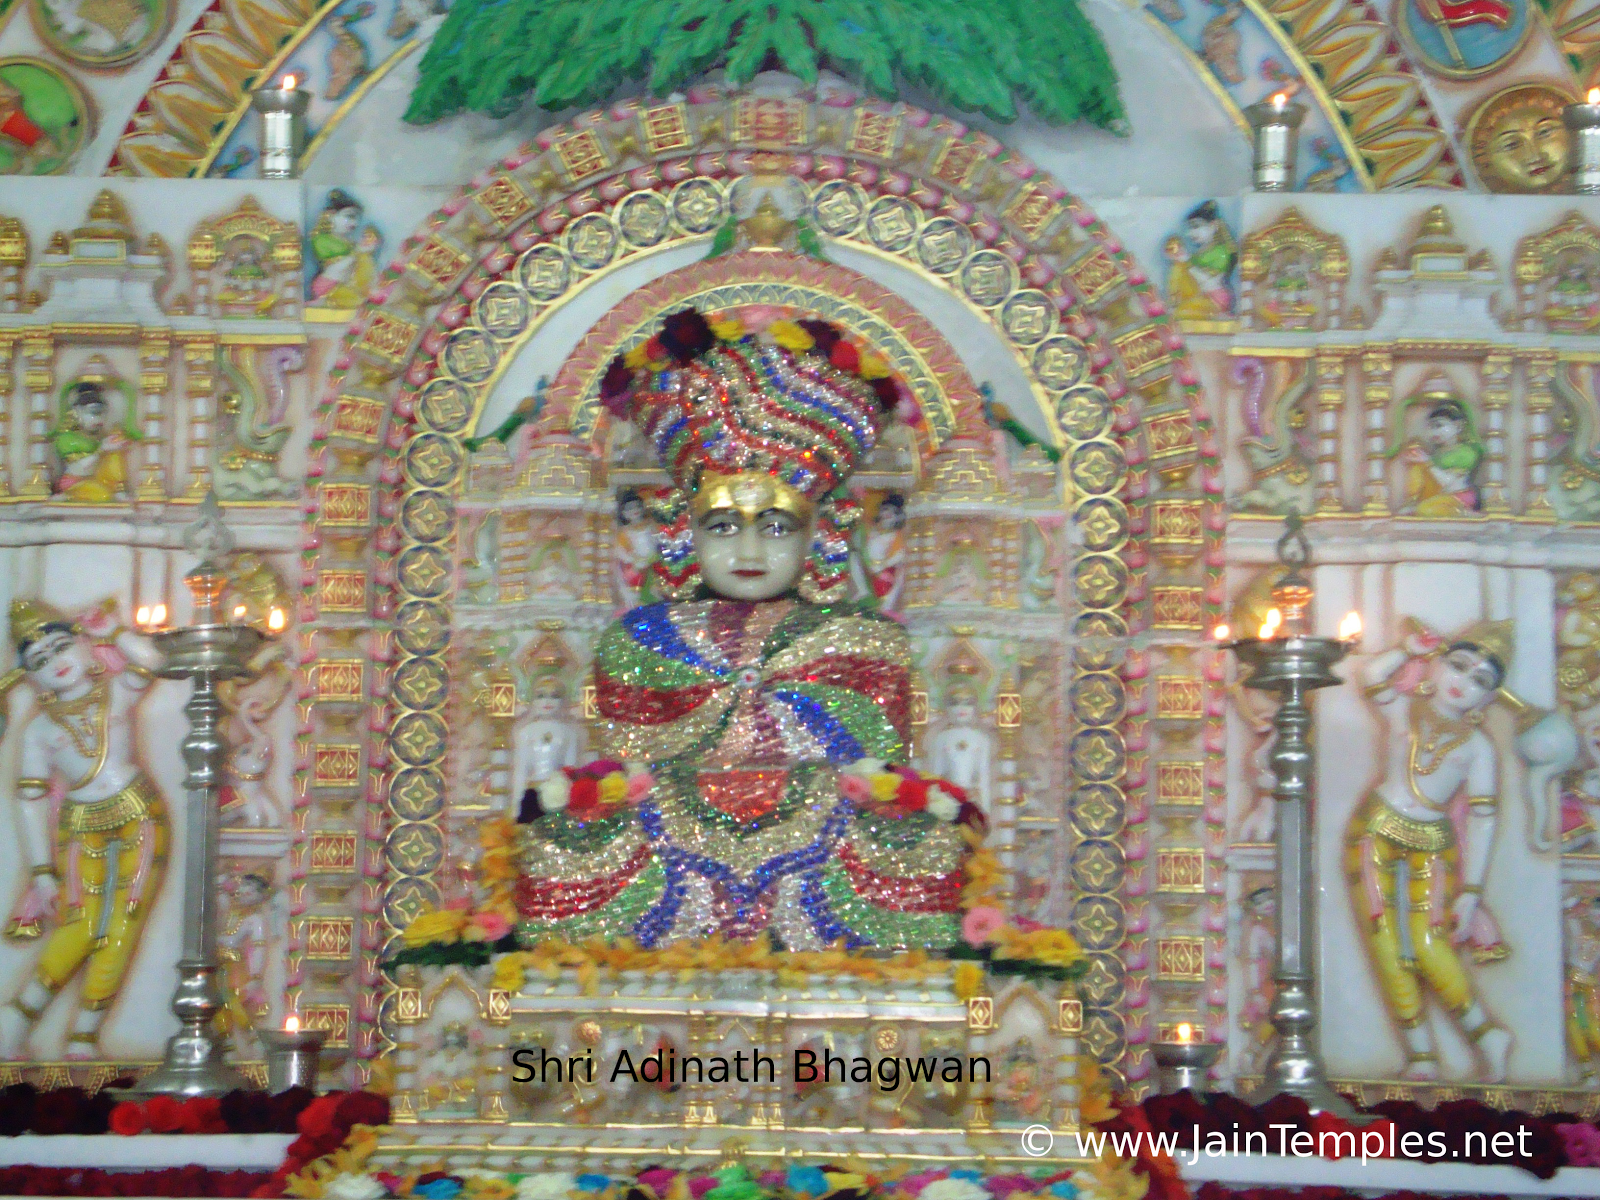 Jain Images- Get all Free images from Jain Religion: Adinath Bhagwan